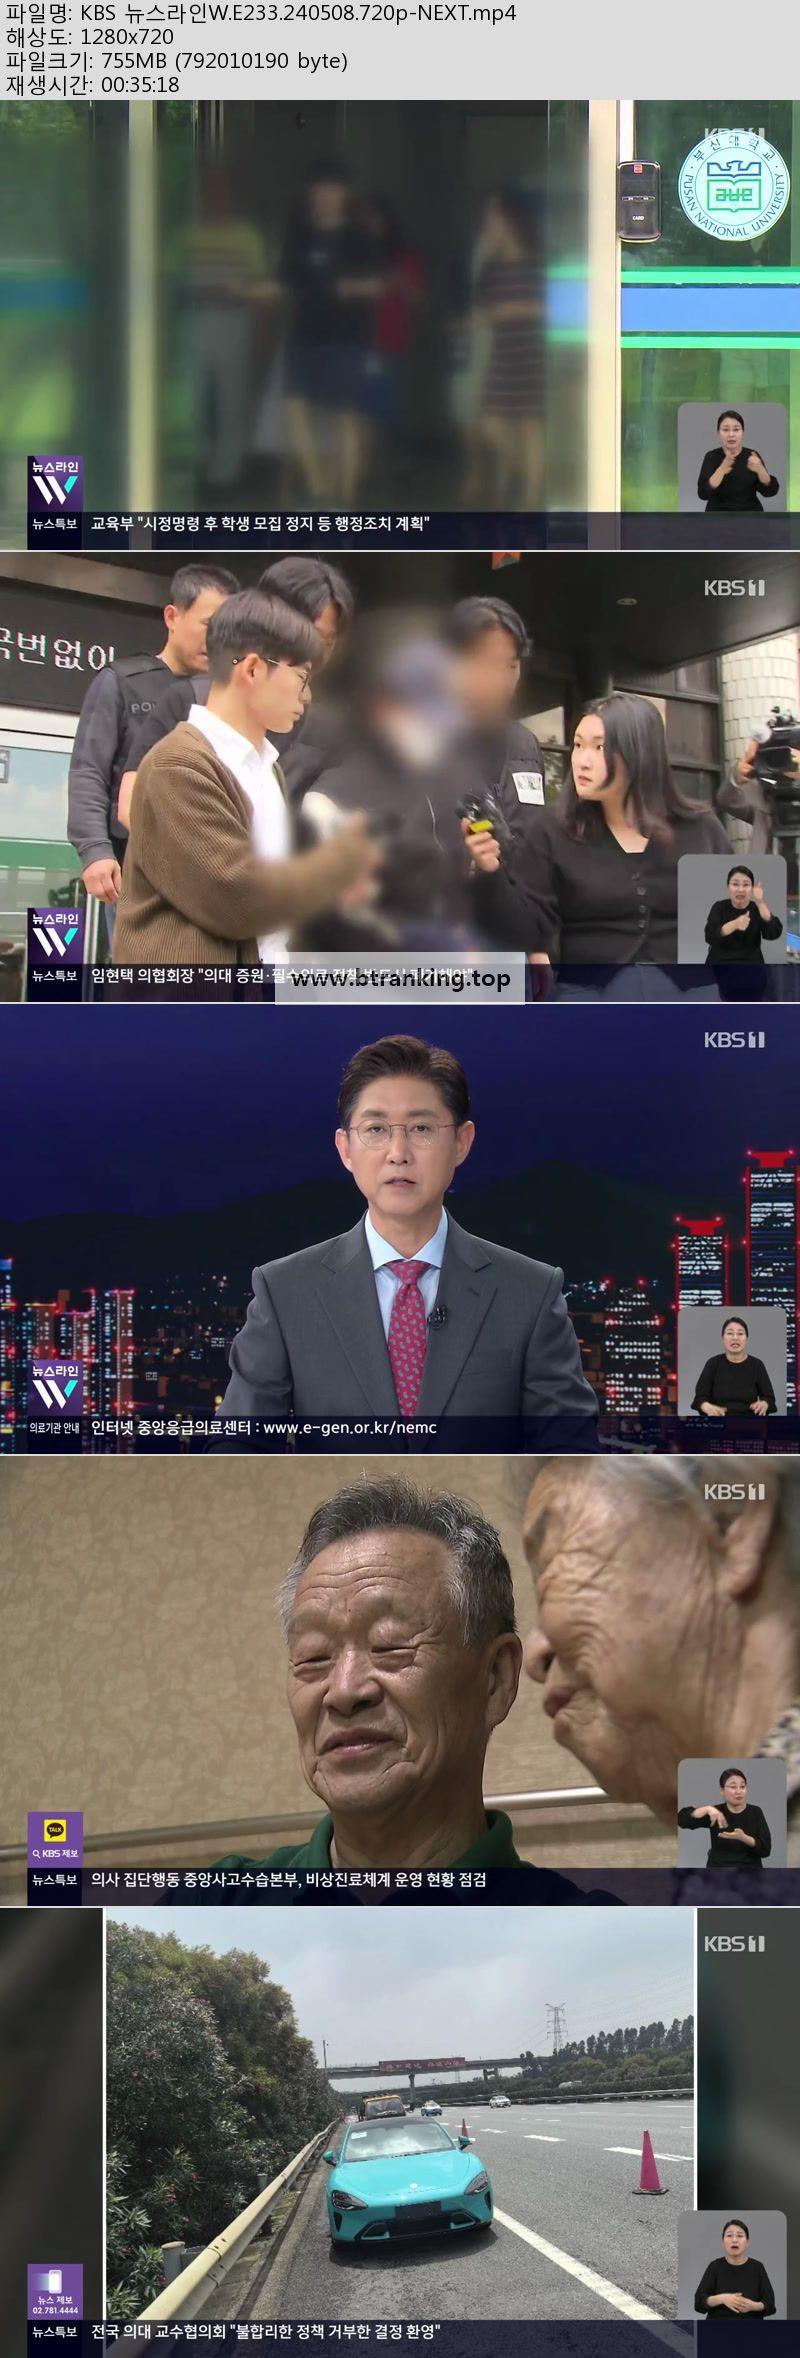 KBS 뉴스라인W.E233.240508.720p-NEXT